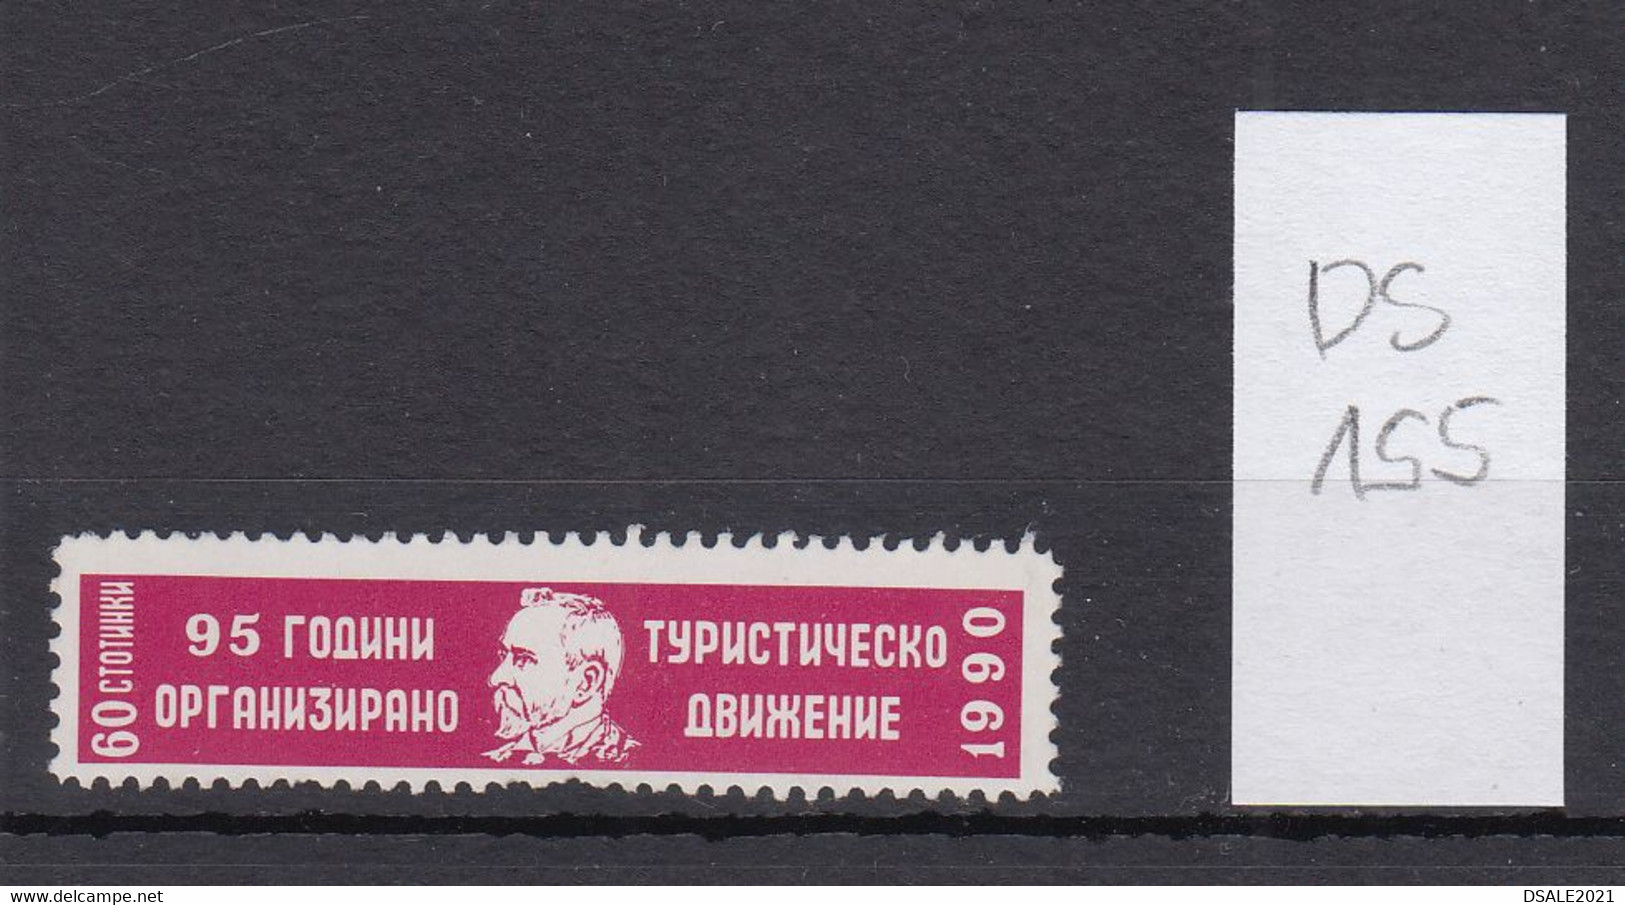 Bulgaria Bulgarie Bulgarije 1955 Bulgarian Tourist Board Membership 60st. Fiscal Revenue Stamp (ds155) - Official Stamps